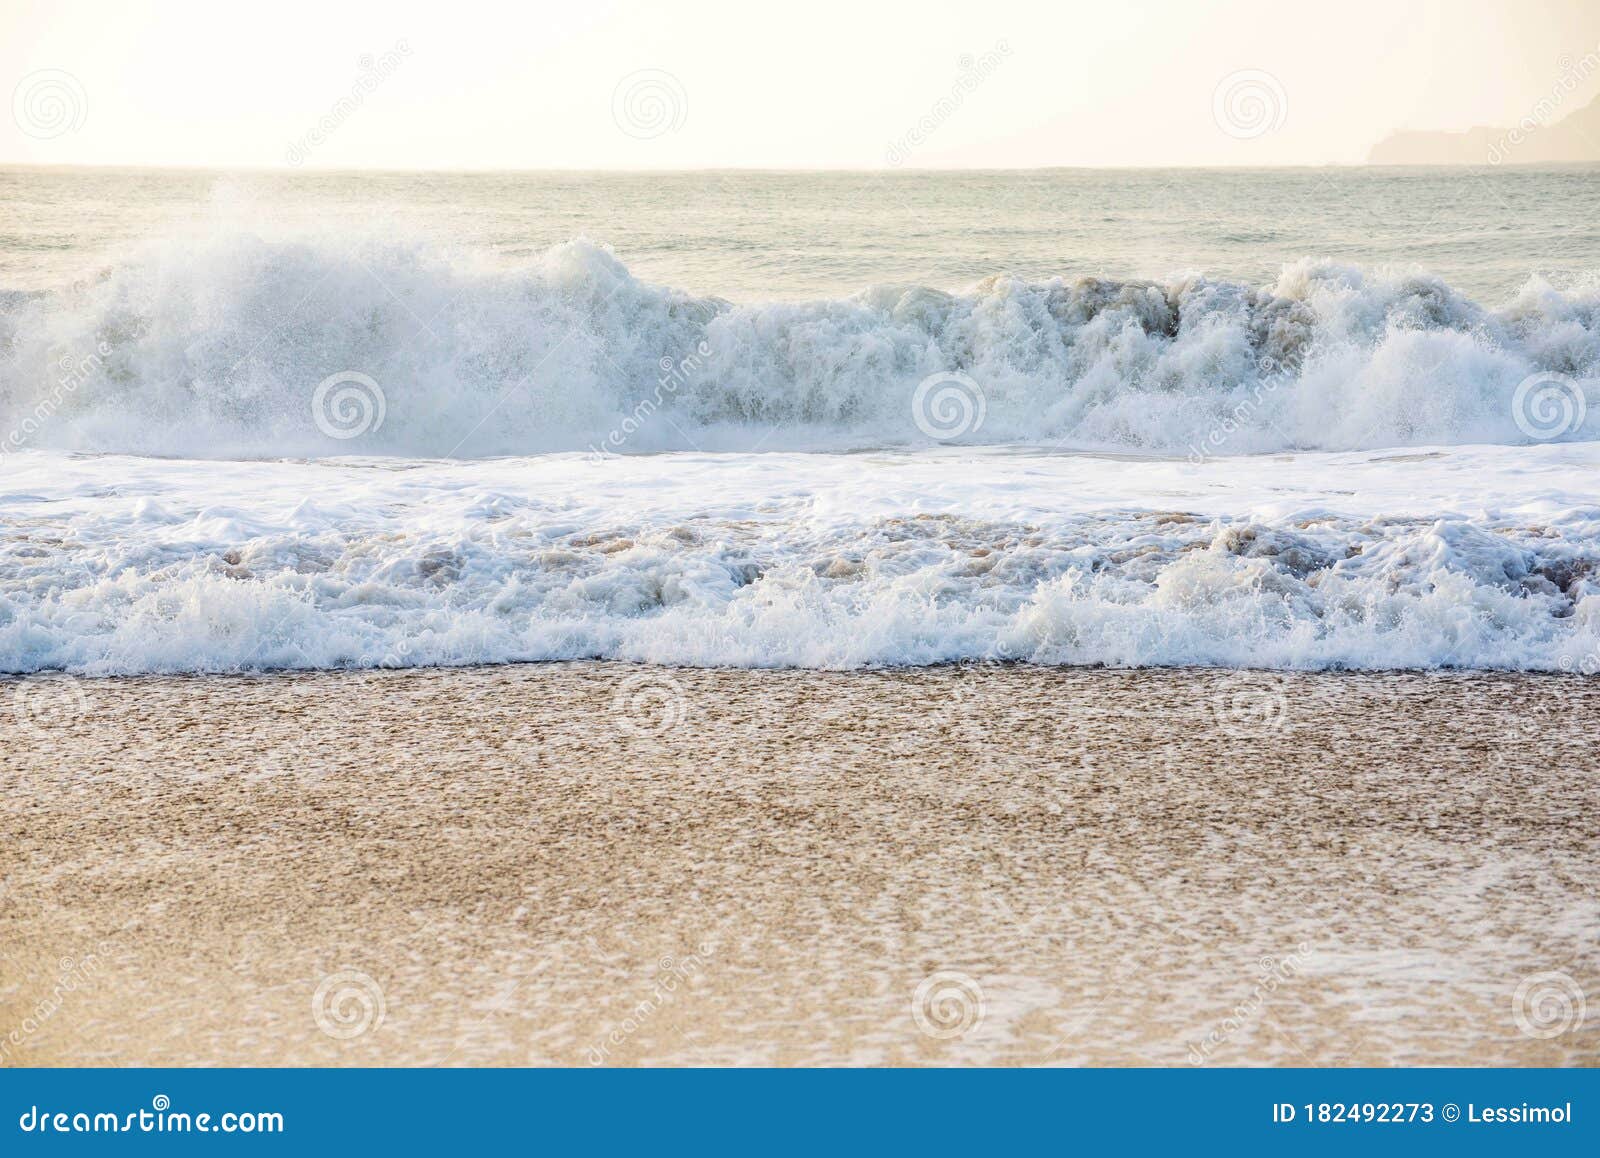 Shore and Wave Splashing. Endless Ocean Landscape Stock Image - Image ...